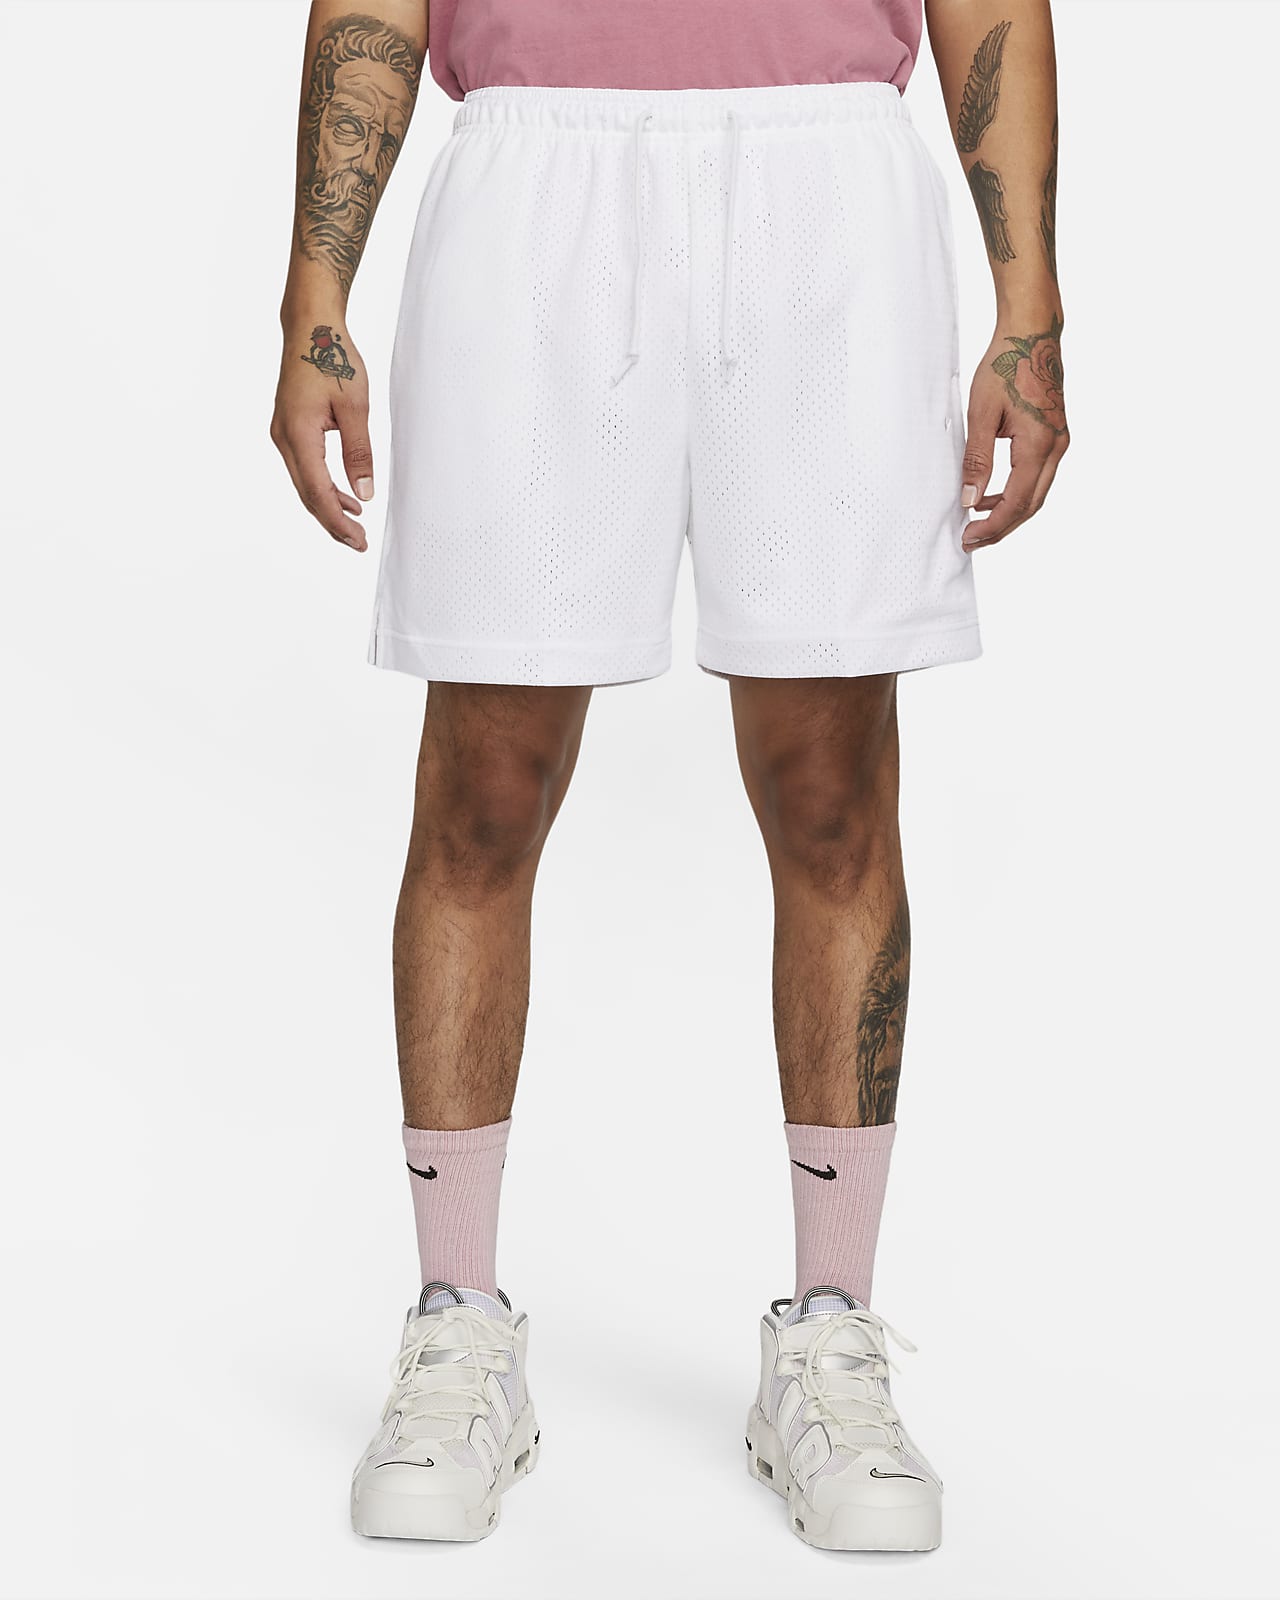 Nike Men's Basketball Shorts in White, Size: Medium | CD7101-100